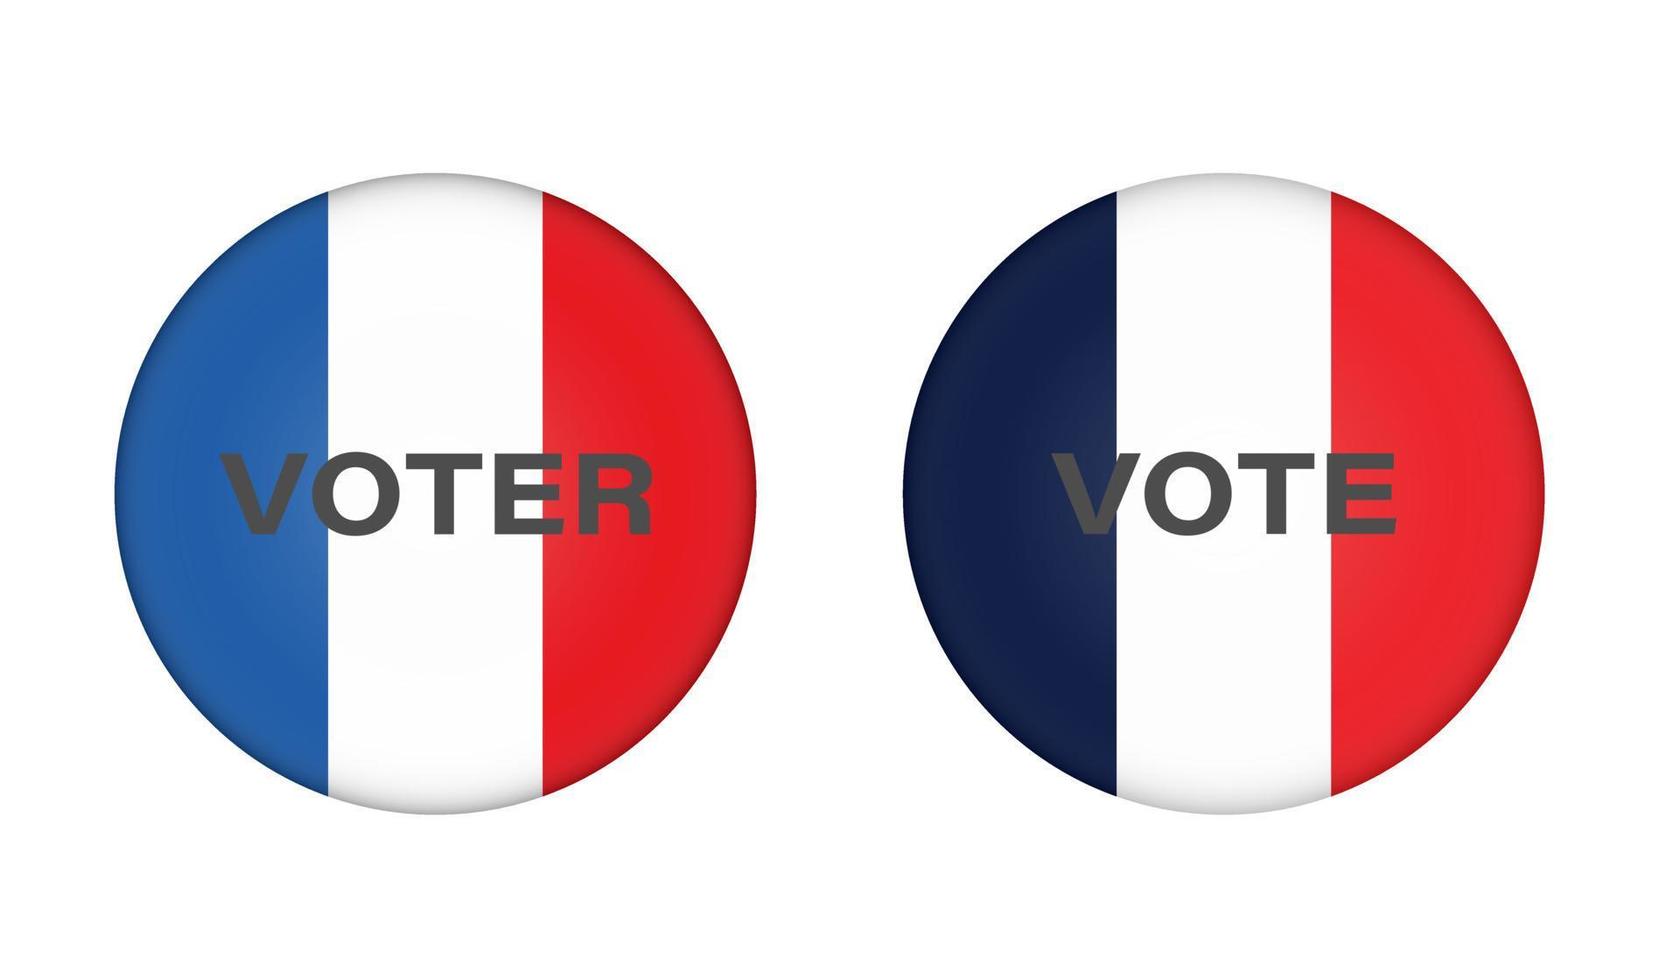 2022 presidentsverkiezingen in frankrijk badge of knop met franse vlag vector